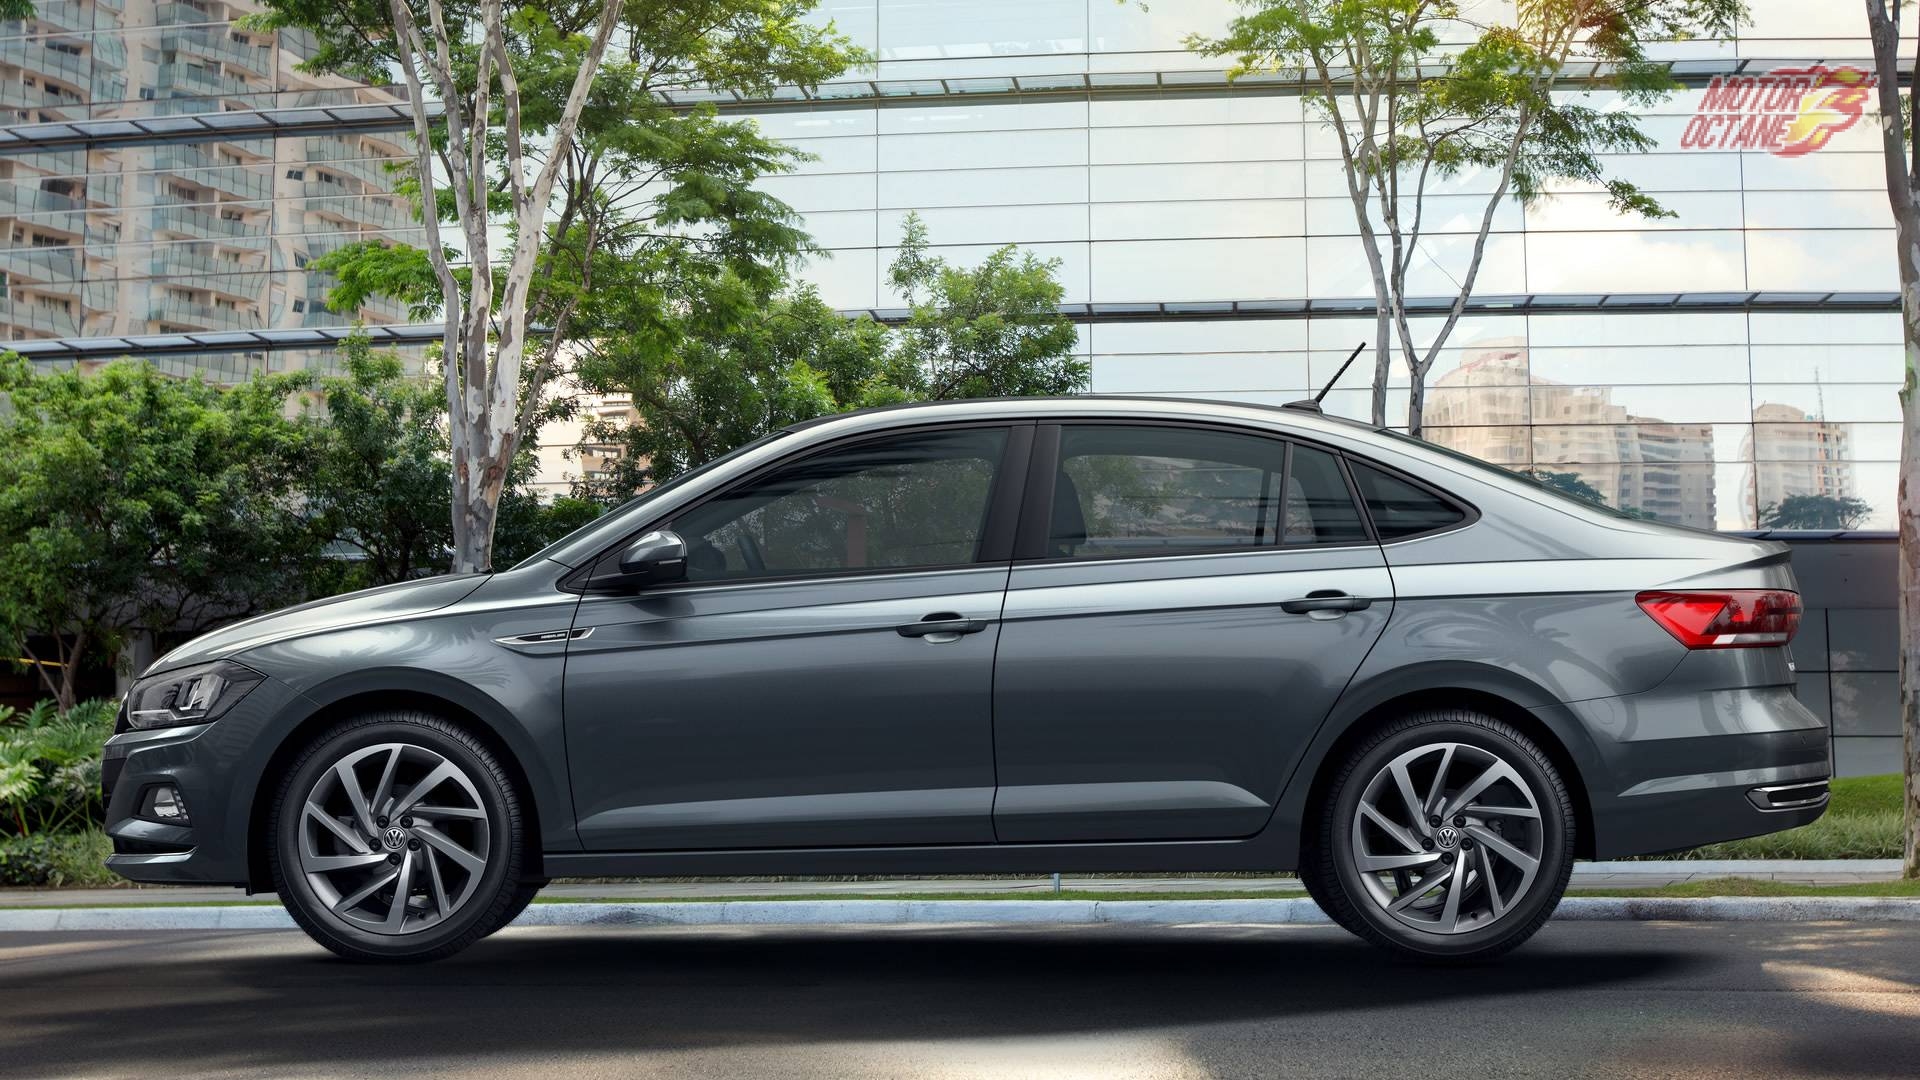 Volkswagen Vento 2021 Price In India Launch Date Specificatons